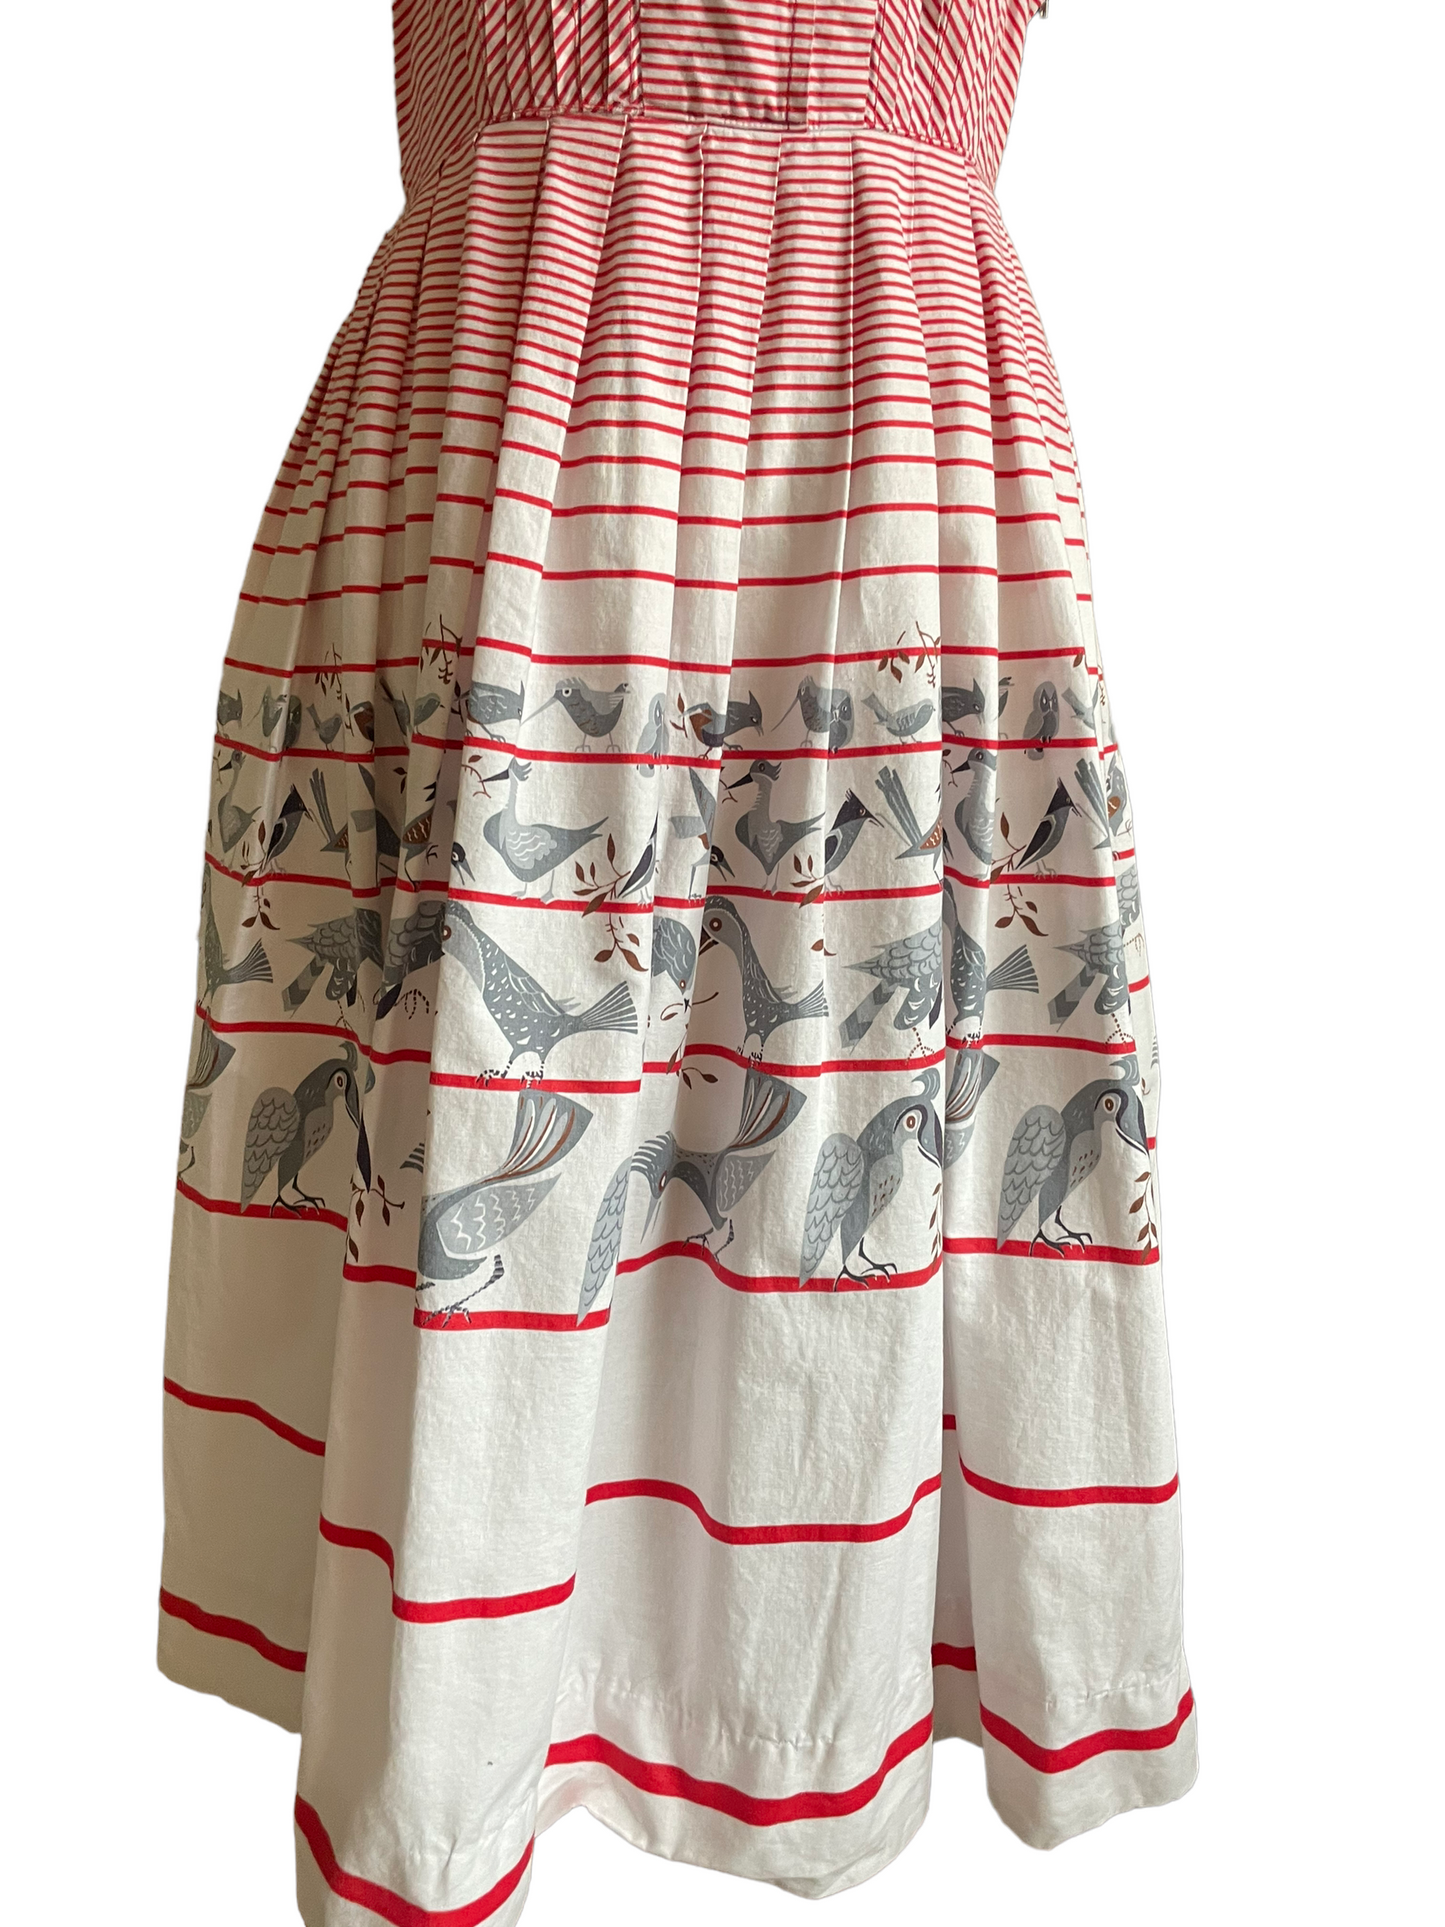 Vintage 1950s Novelty Bird Dress SZ S |  Barn Owl Vintage | Seattle Vintage Dresses Front view of skirt.